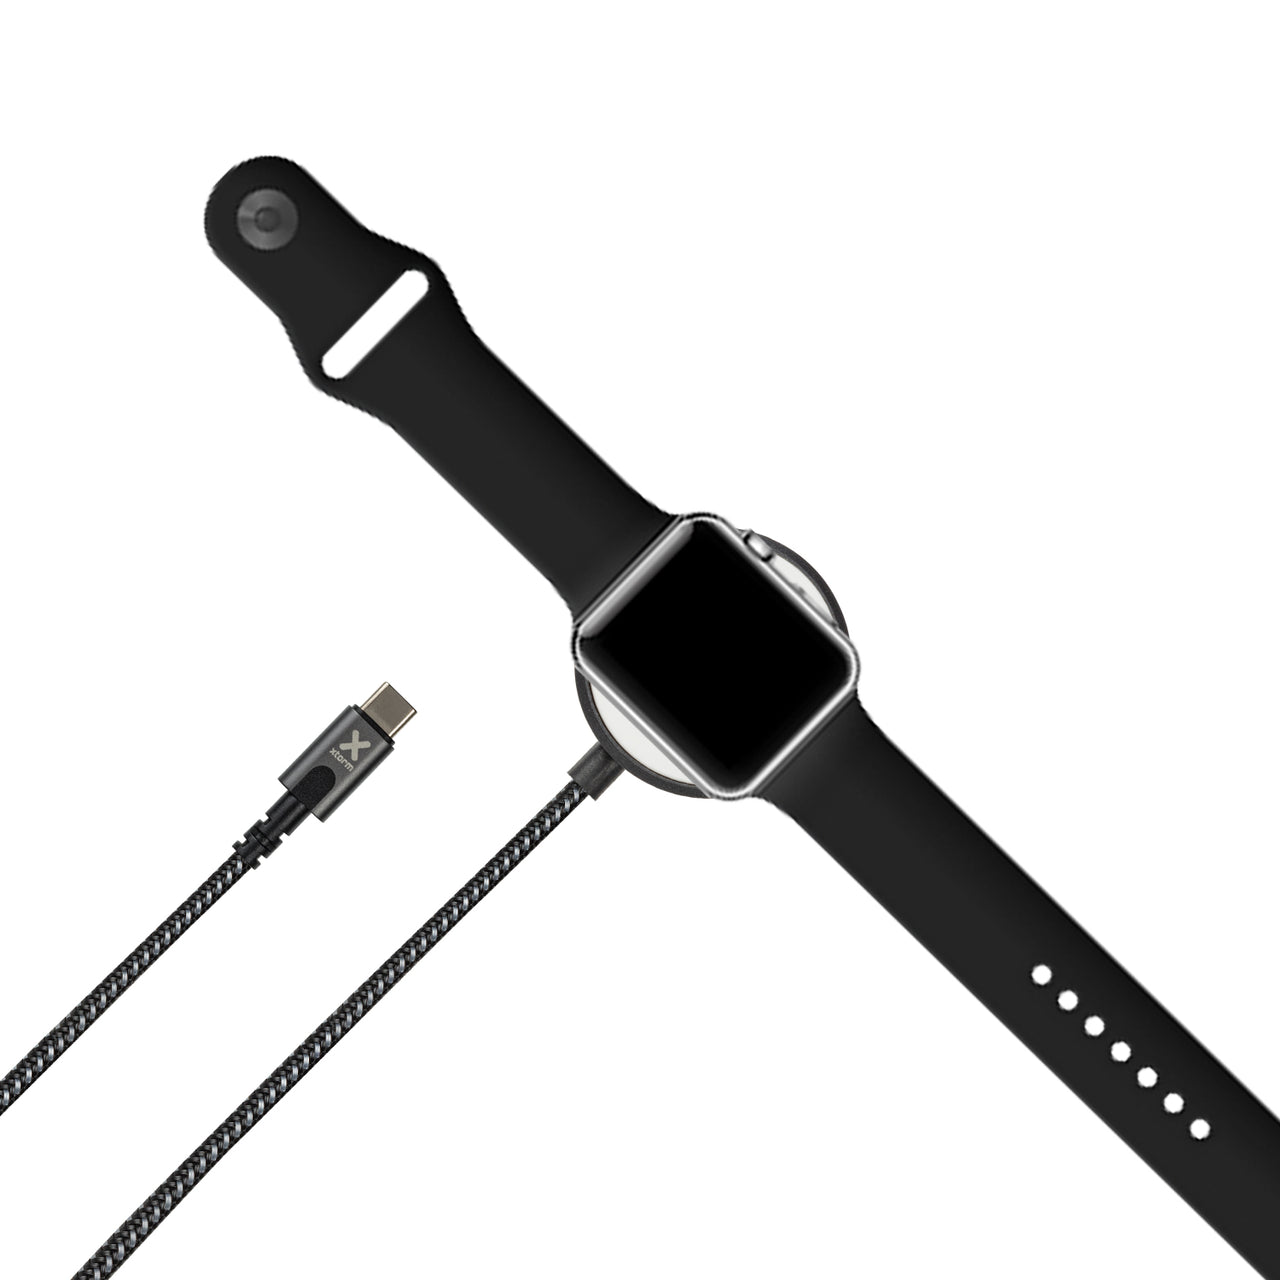 Câble de chargement PowerStream Apple Watch - 1,5 mètre